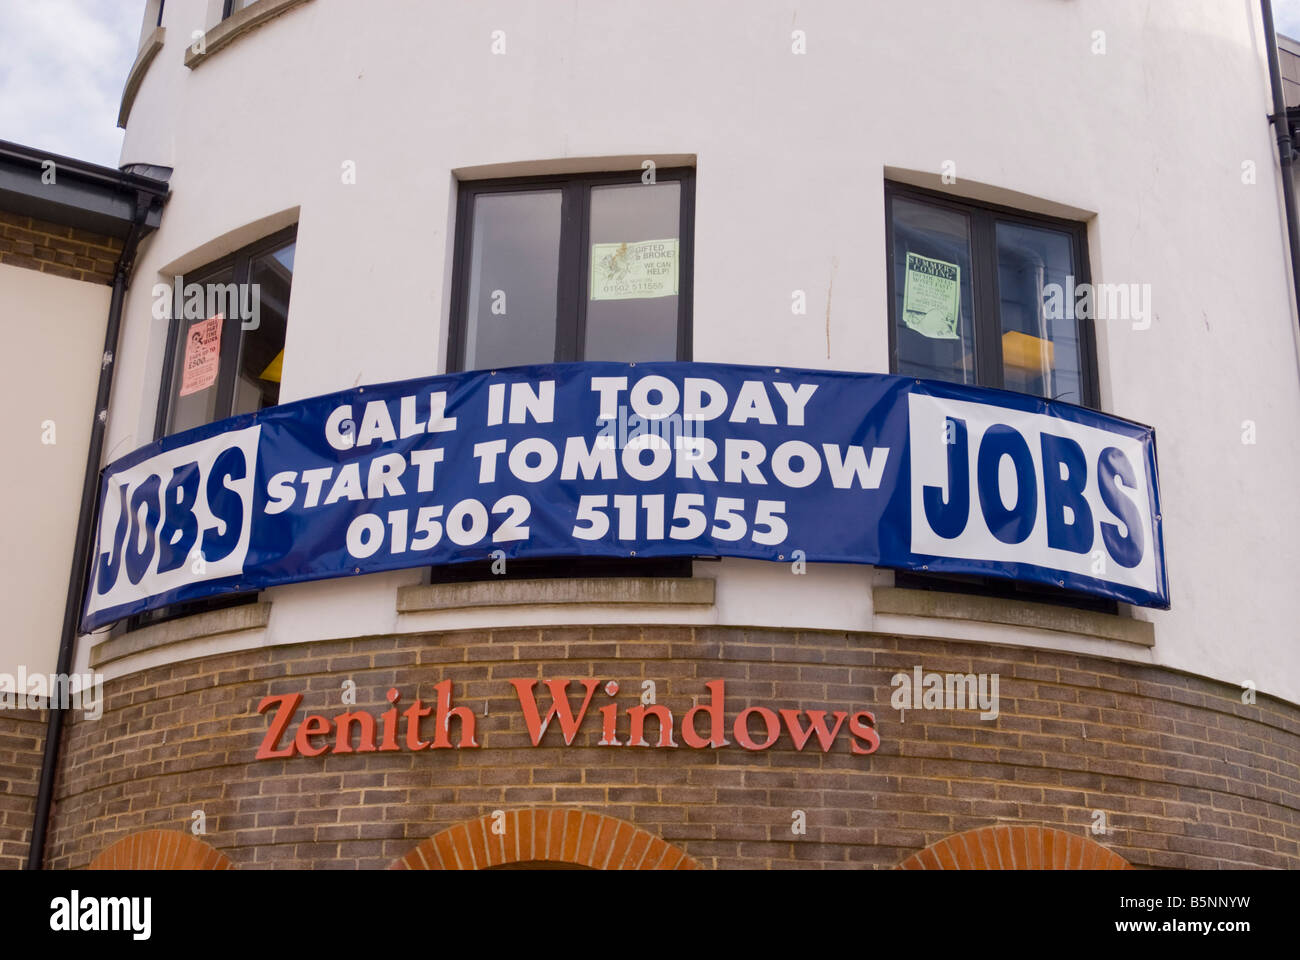 Zenith Windows in  Lowestoft,Suffolk,Uk advertising job vacancies for work Stock Photo